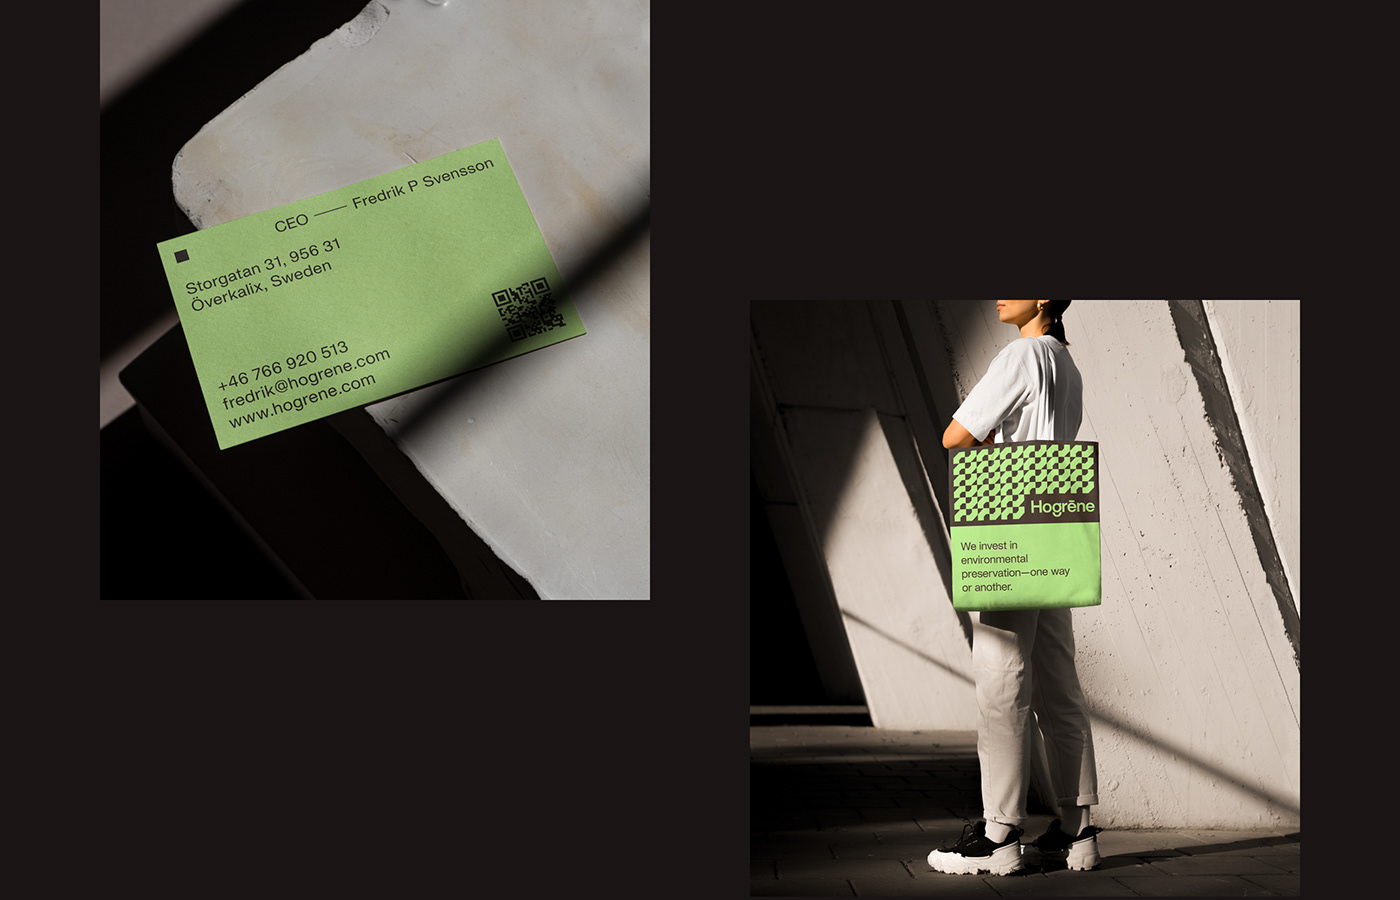 Hogrene case study by Uniko studio. Business card and tote bag design.